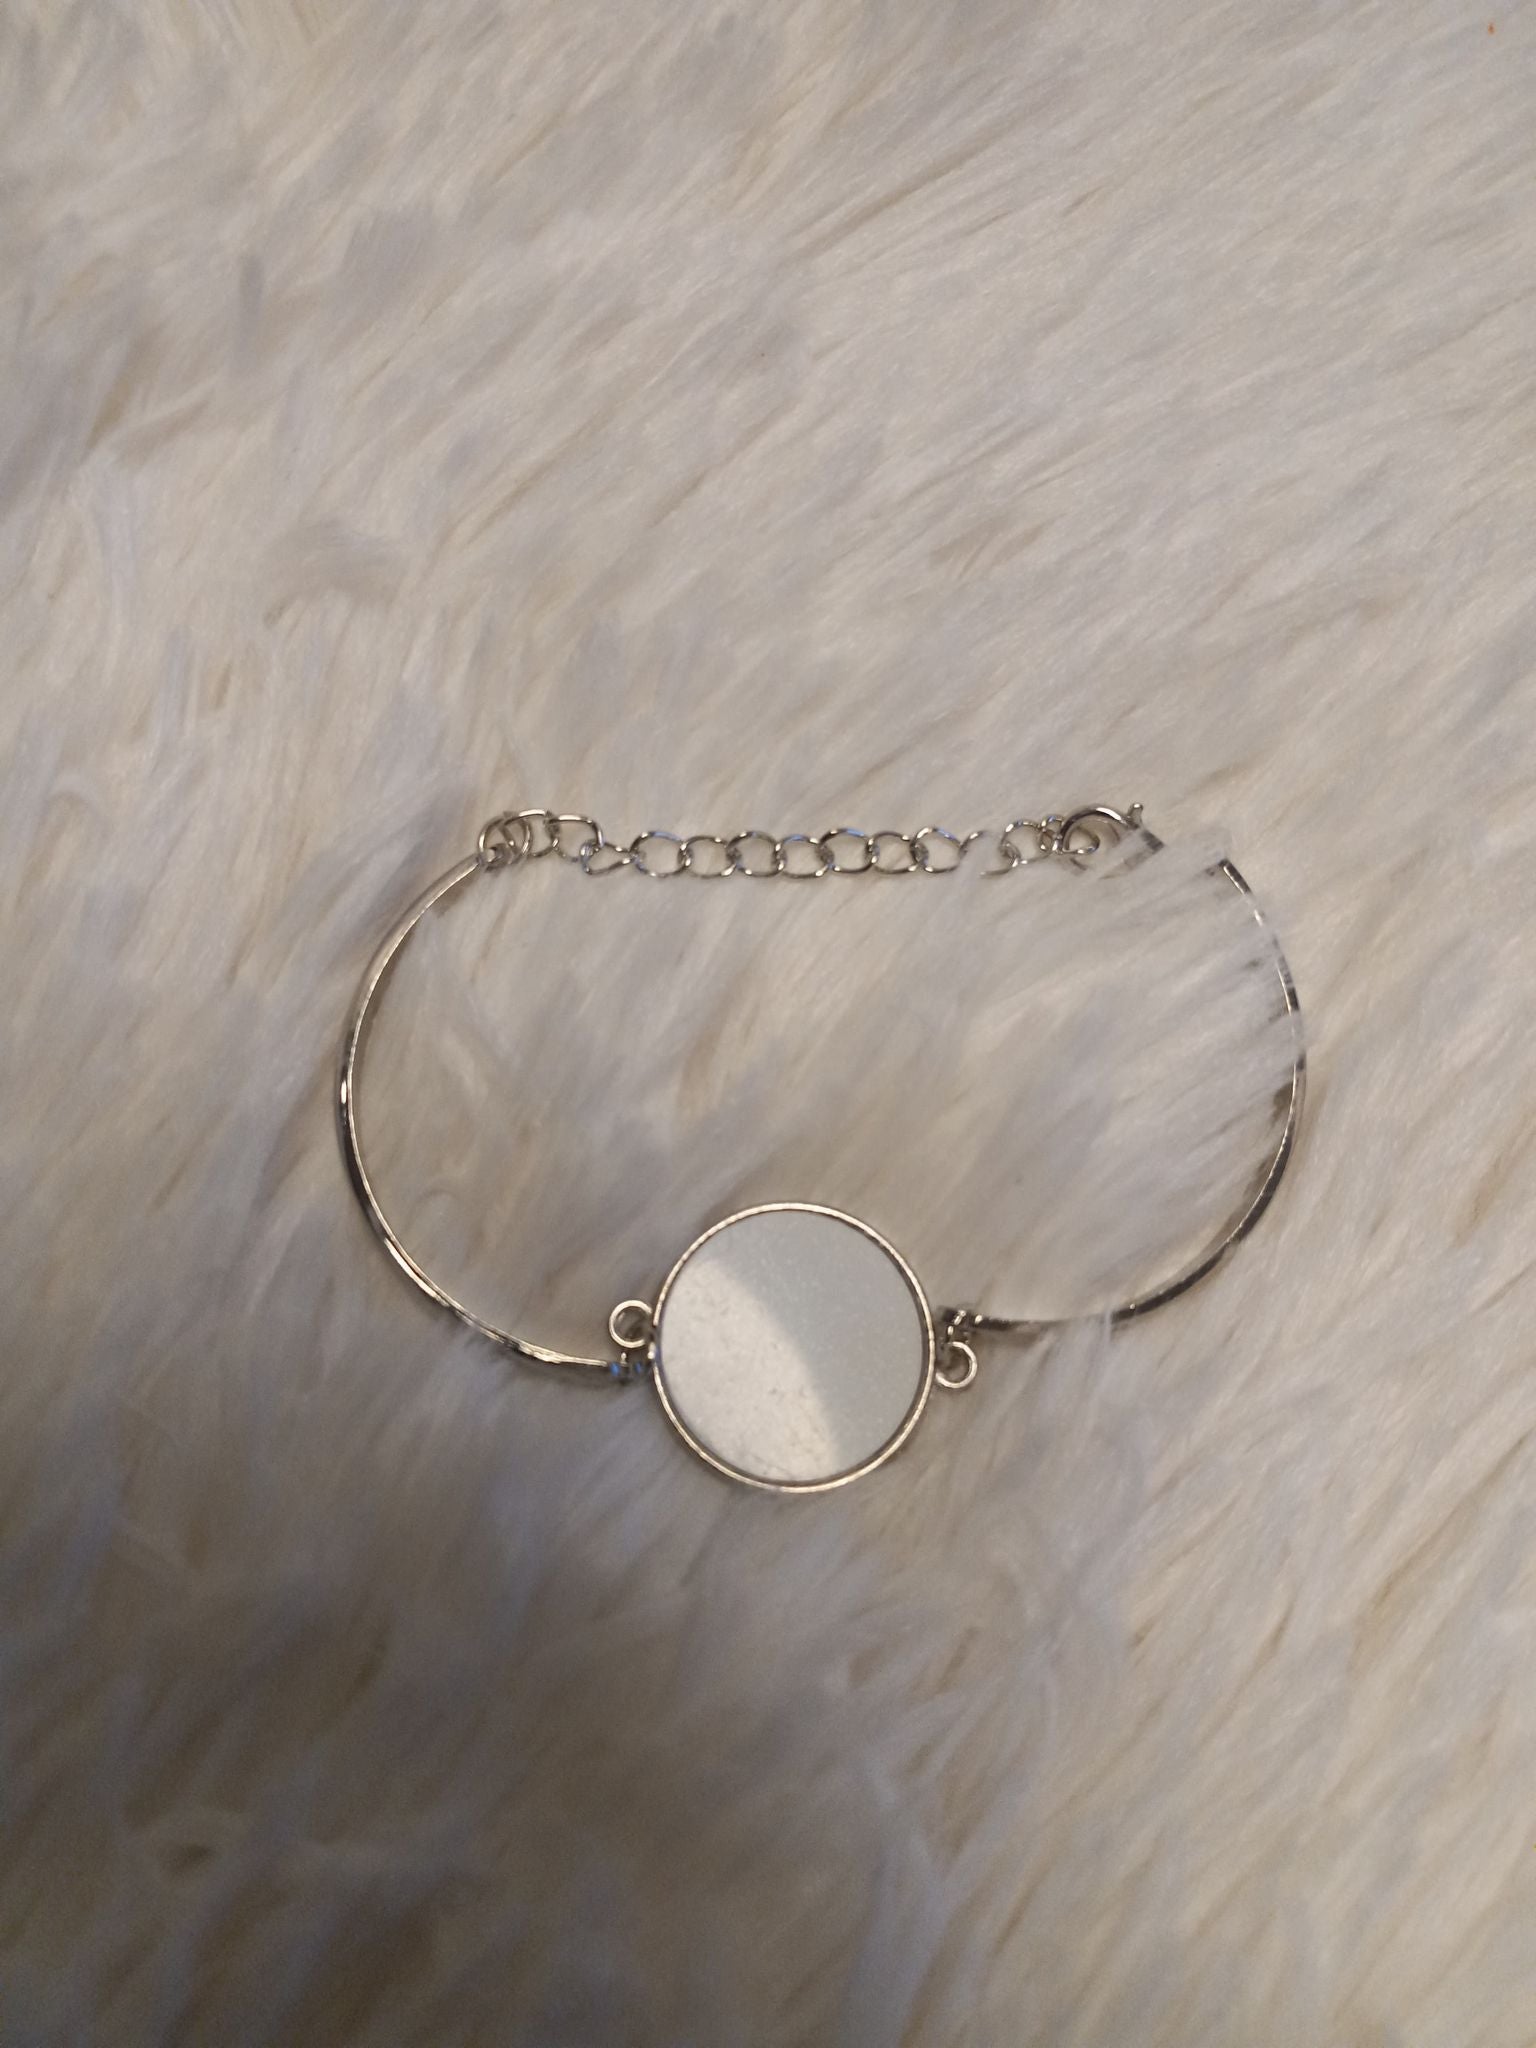 Bracelet(one side only)